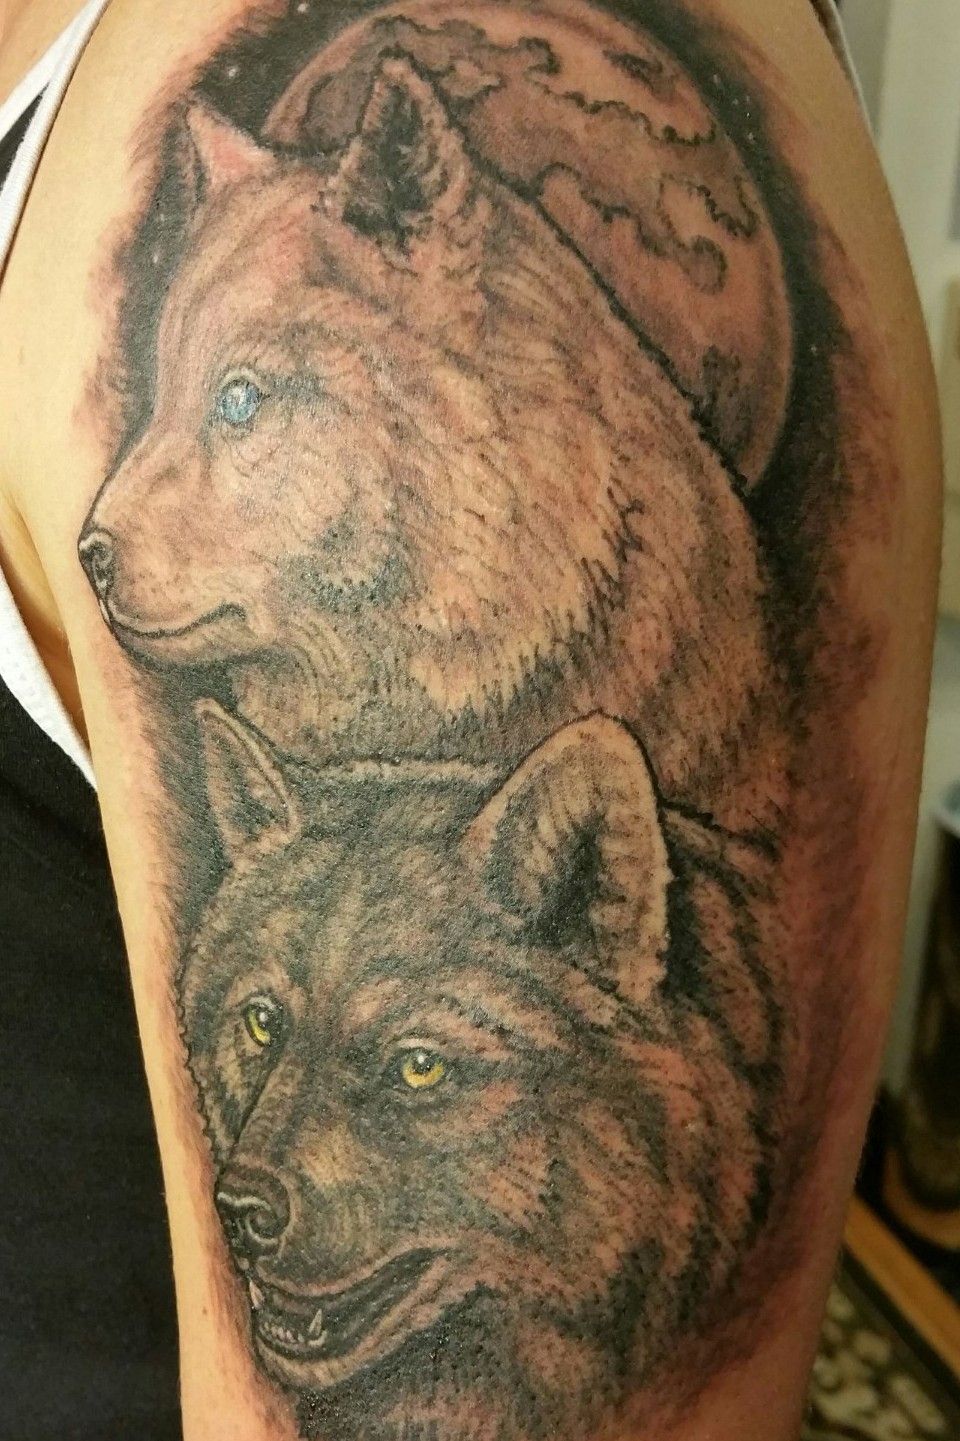 The 10 best wolf tattoo ideas that will amaze you   Онлайн блог о тату  IdeasTattoo